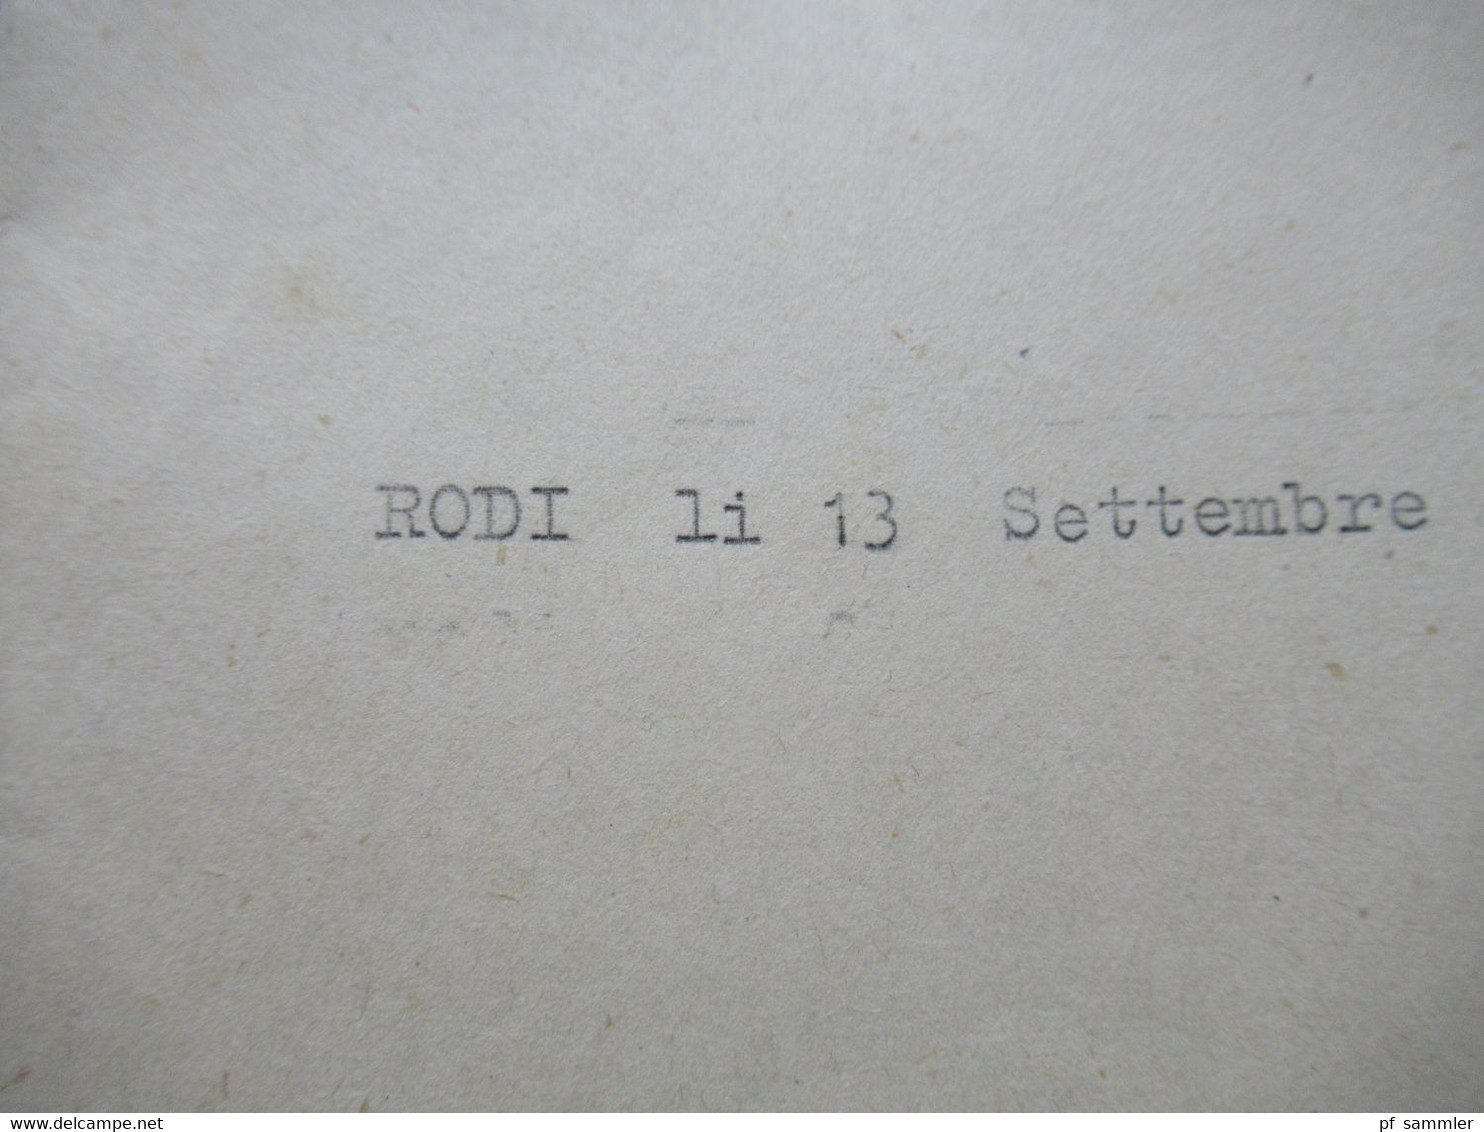 Rhodos / Rodi Egeo / Ägäis 1941 italienische Besetzung Rechnung / Dokument Telegrafici Egeo Mese di Agosto